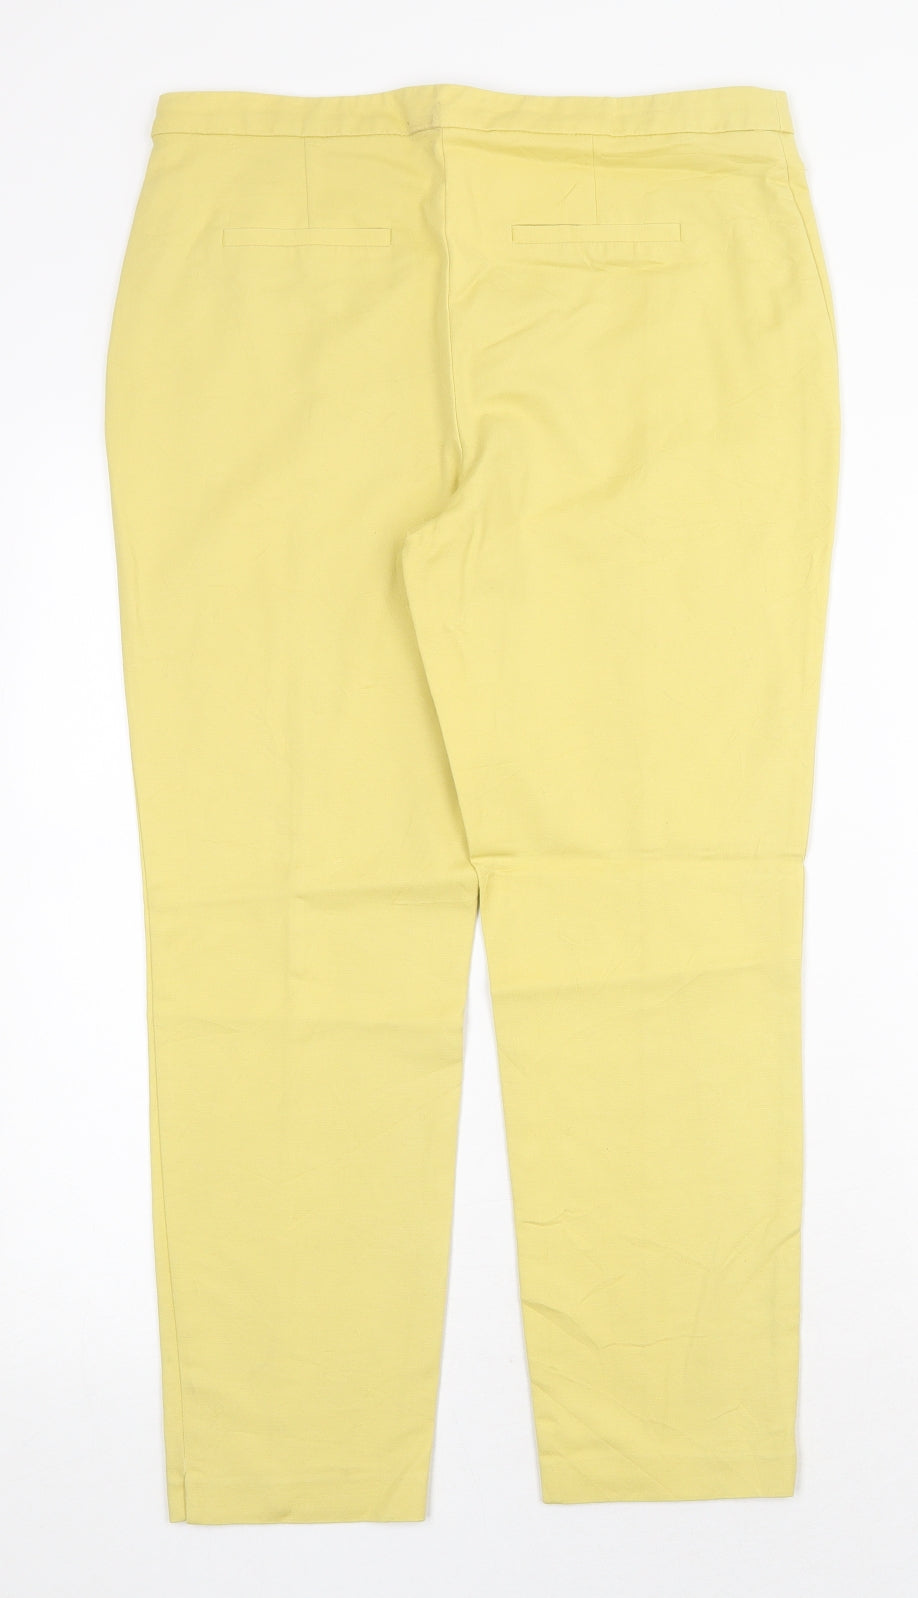 NEXT Womens Yellow Cotton Trousers Size 12 Regular Zip